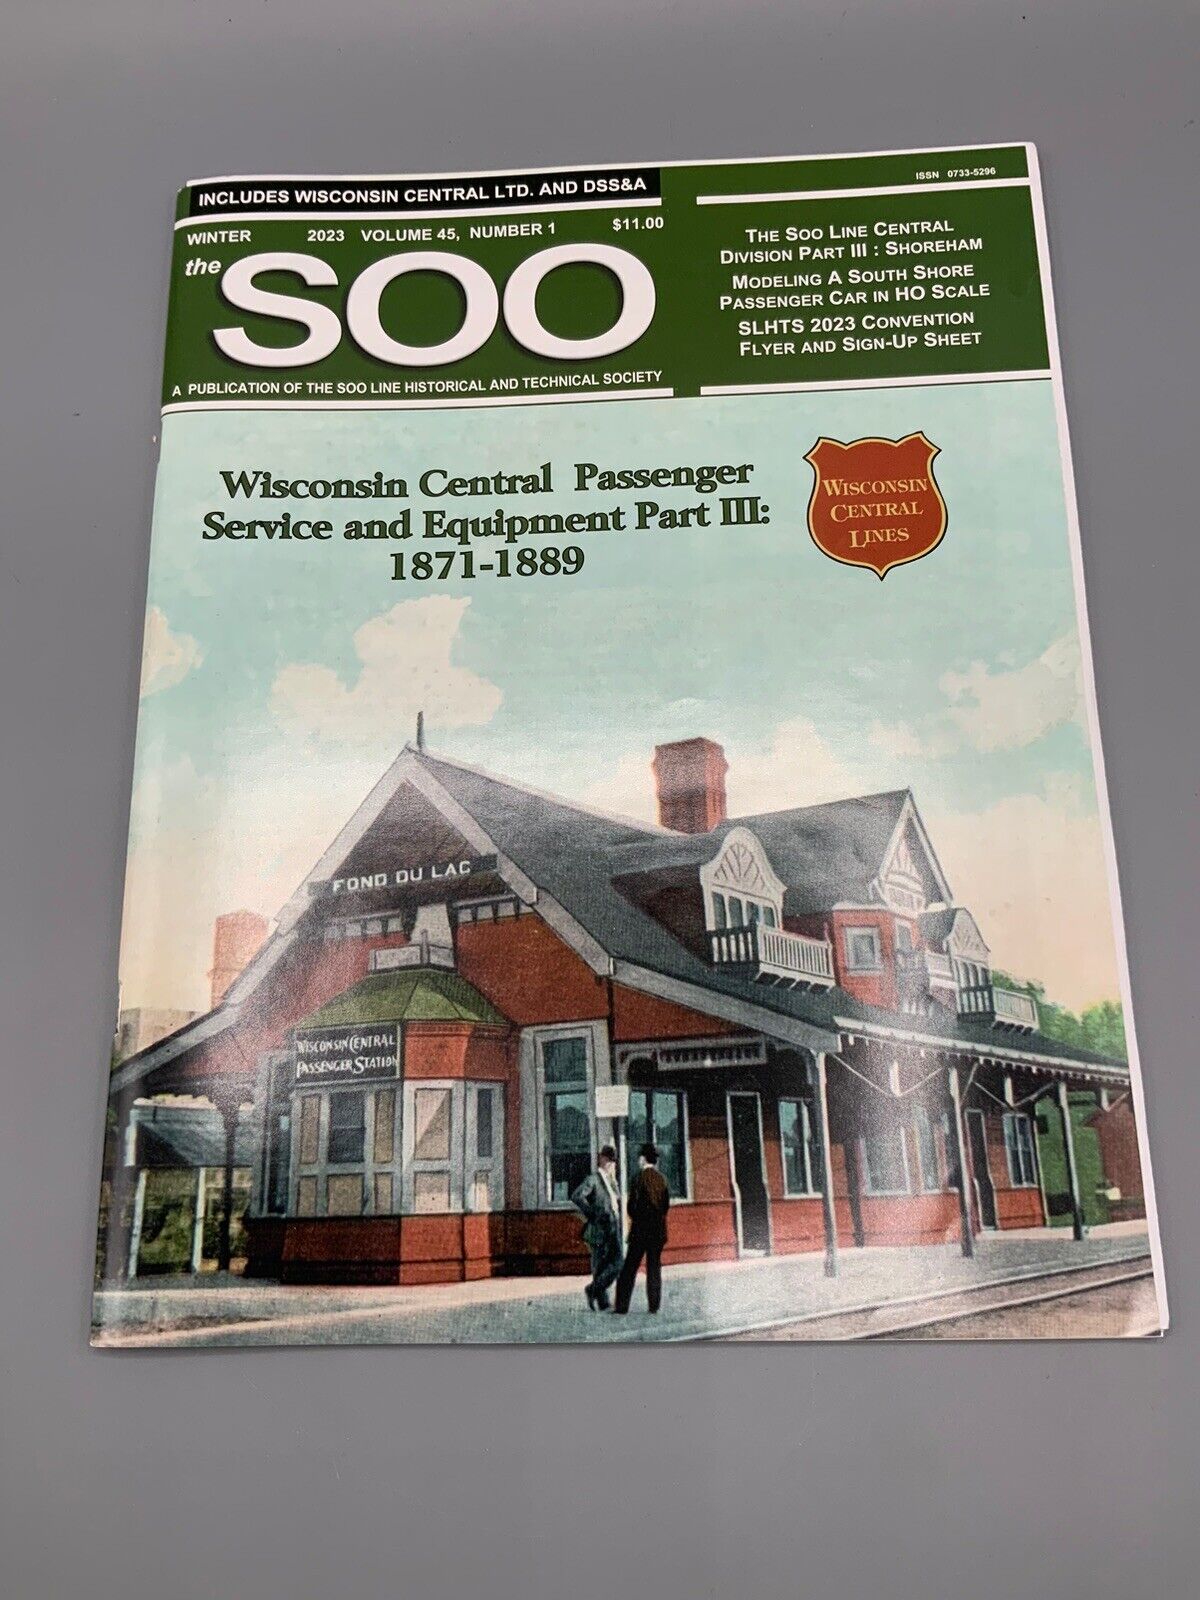 The Soo Magazine. Winter 2023 Volume 45, Number 1